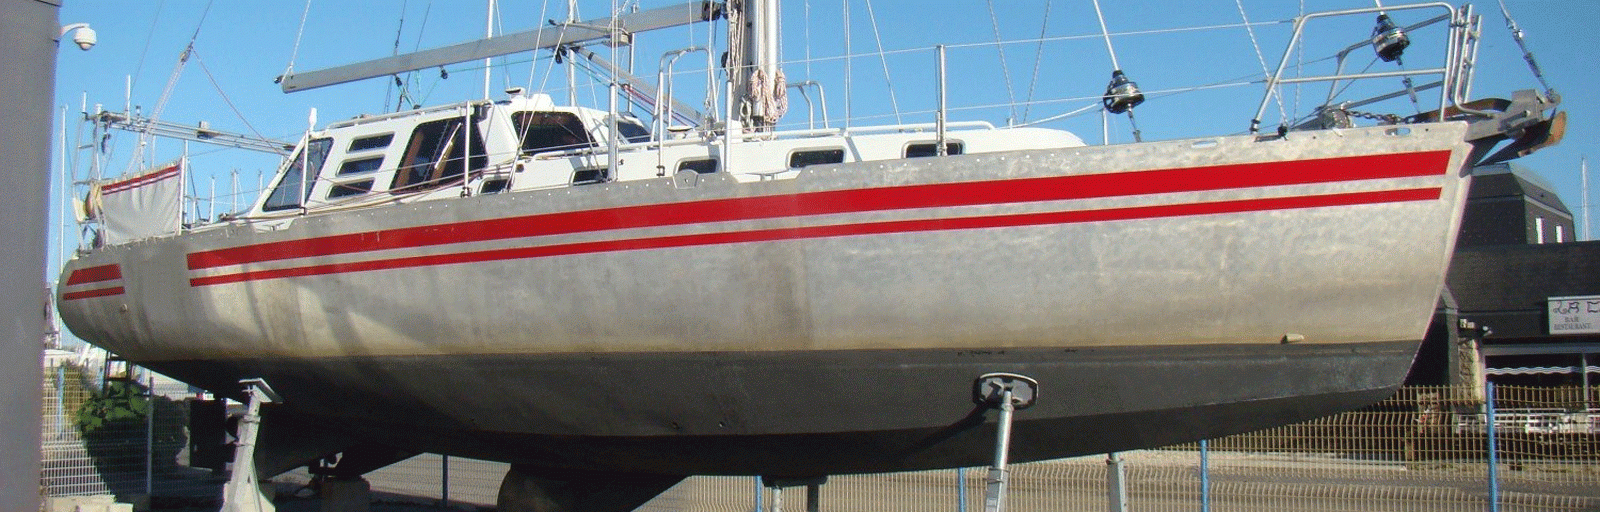 Crozet B - AYC Yachtbroker